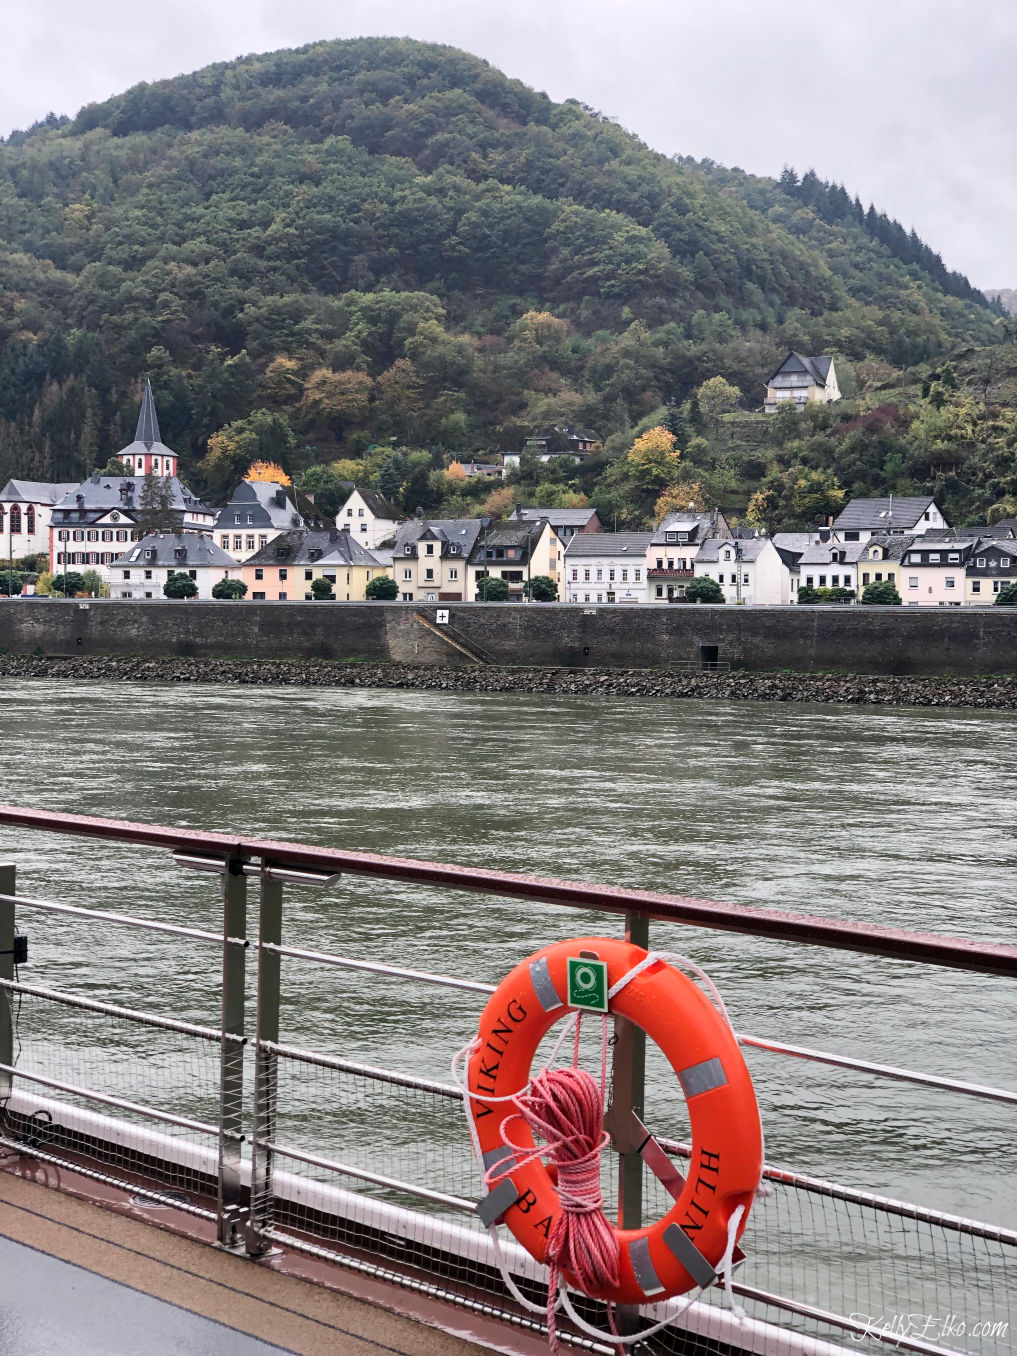 Viking River Cruise along the Rhine River kellyelko.com #rivercruise #vikingrivercruise #myvikingjourney #vikinghlin #rhineriver #vacation #europevacation #travel #travelblog #travelblogger 